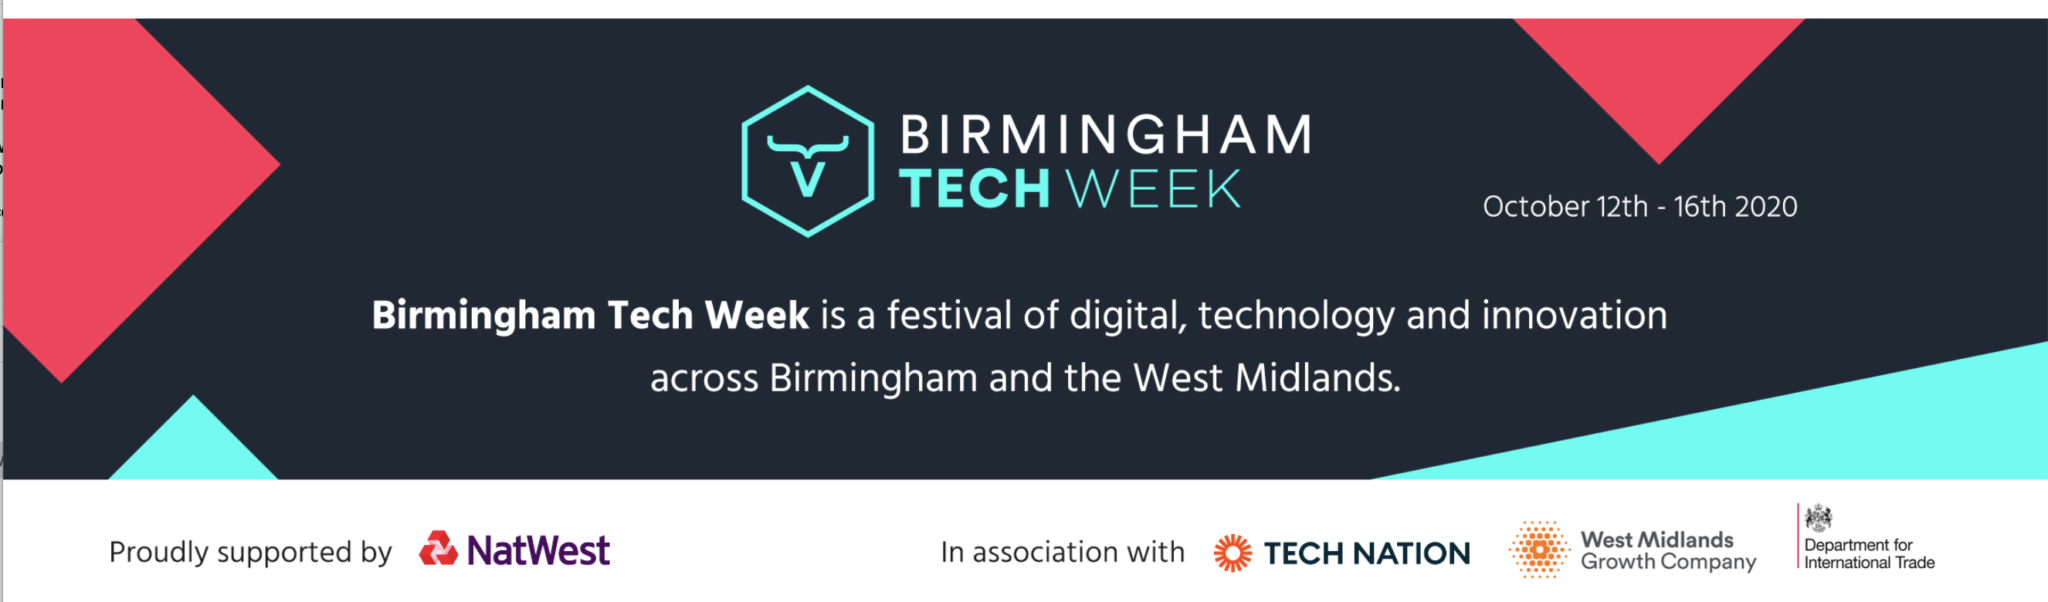 Whitecap to take part in FinTech session at Birmingham Tech Week